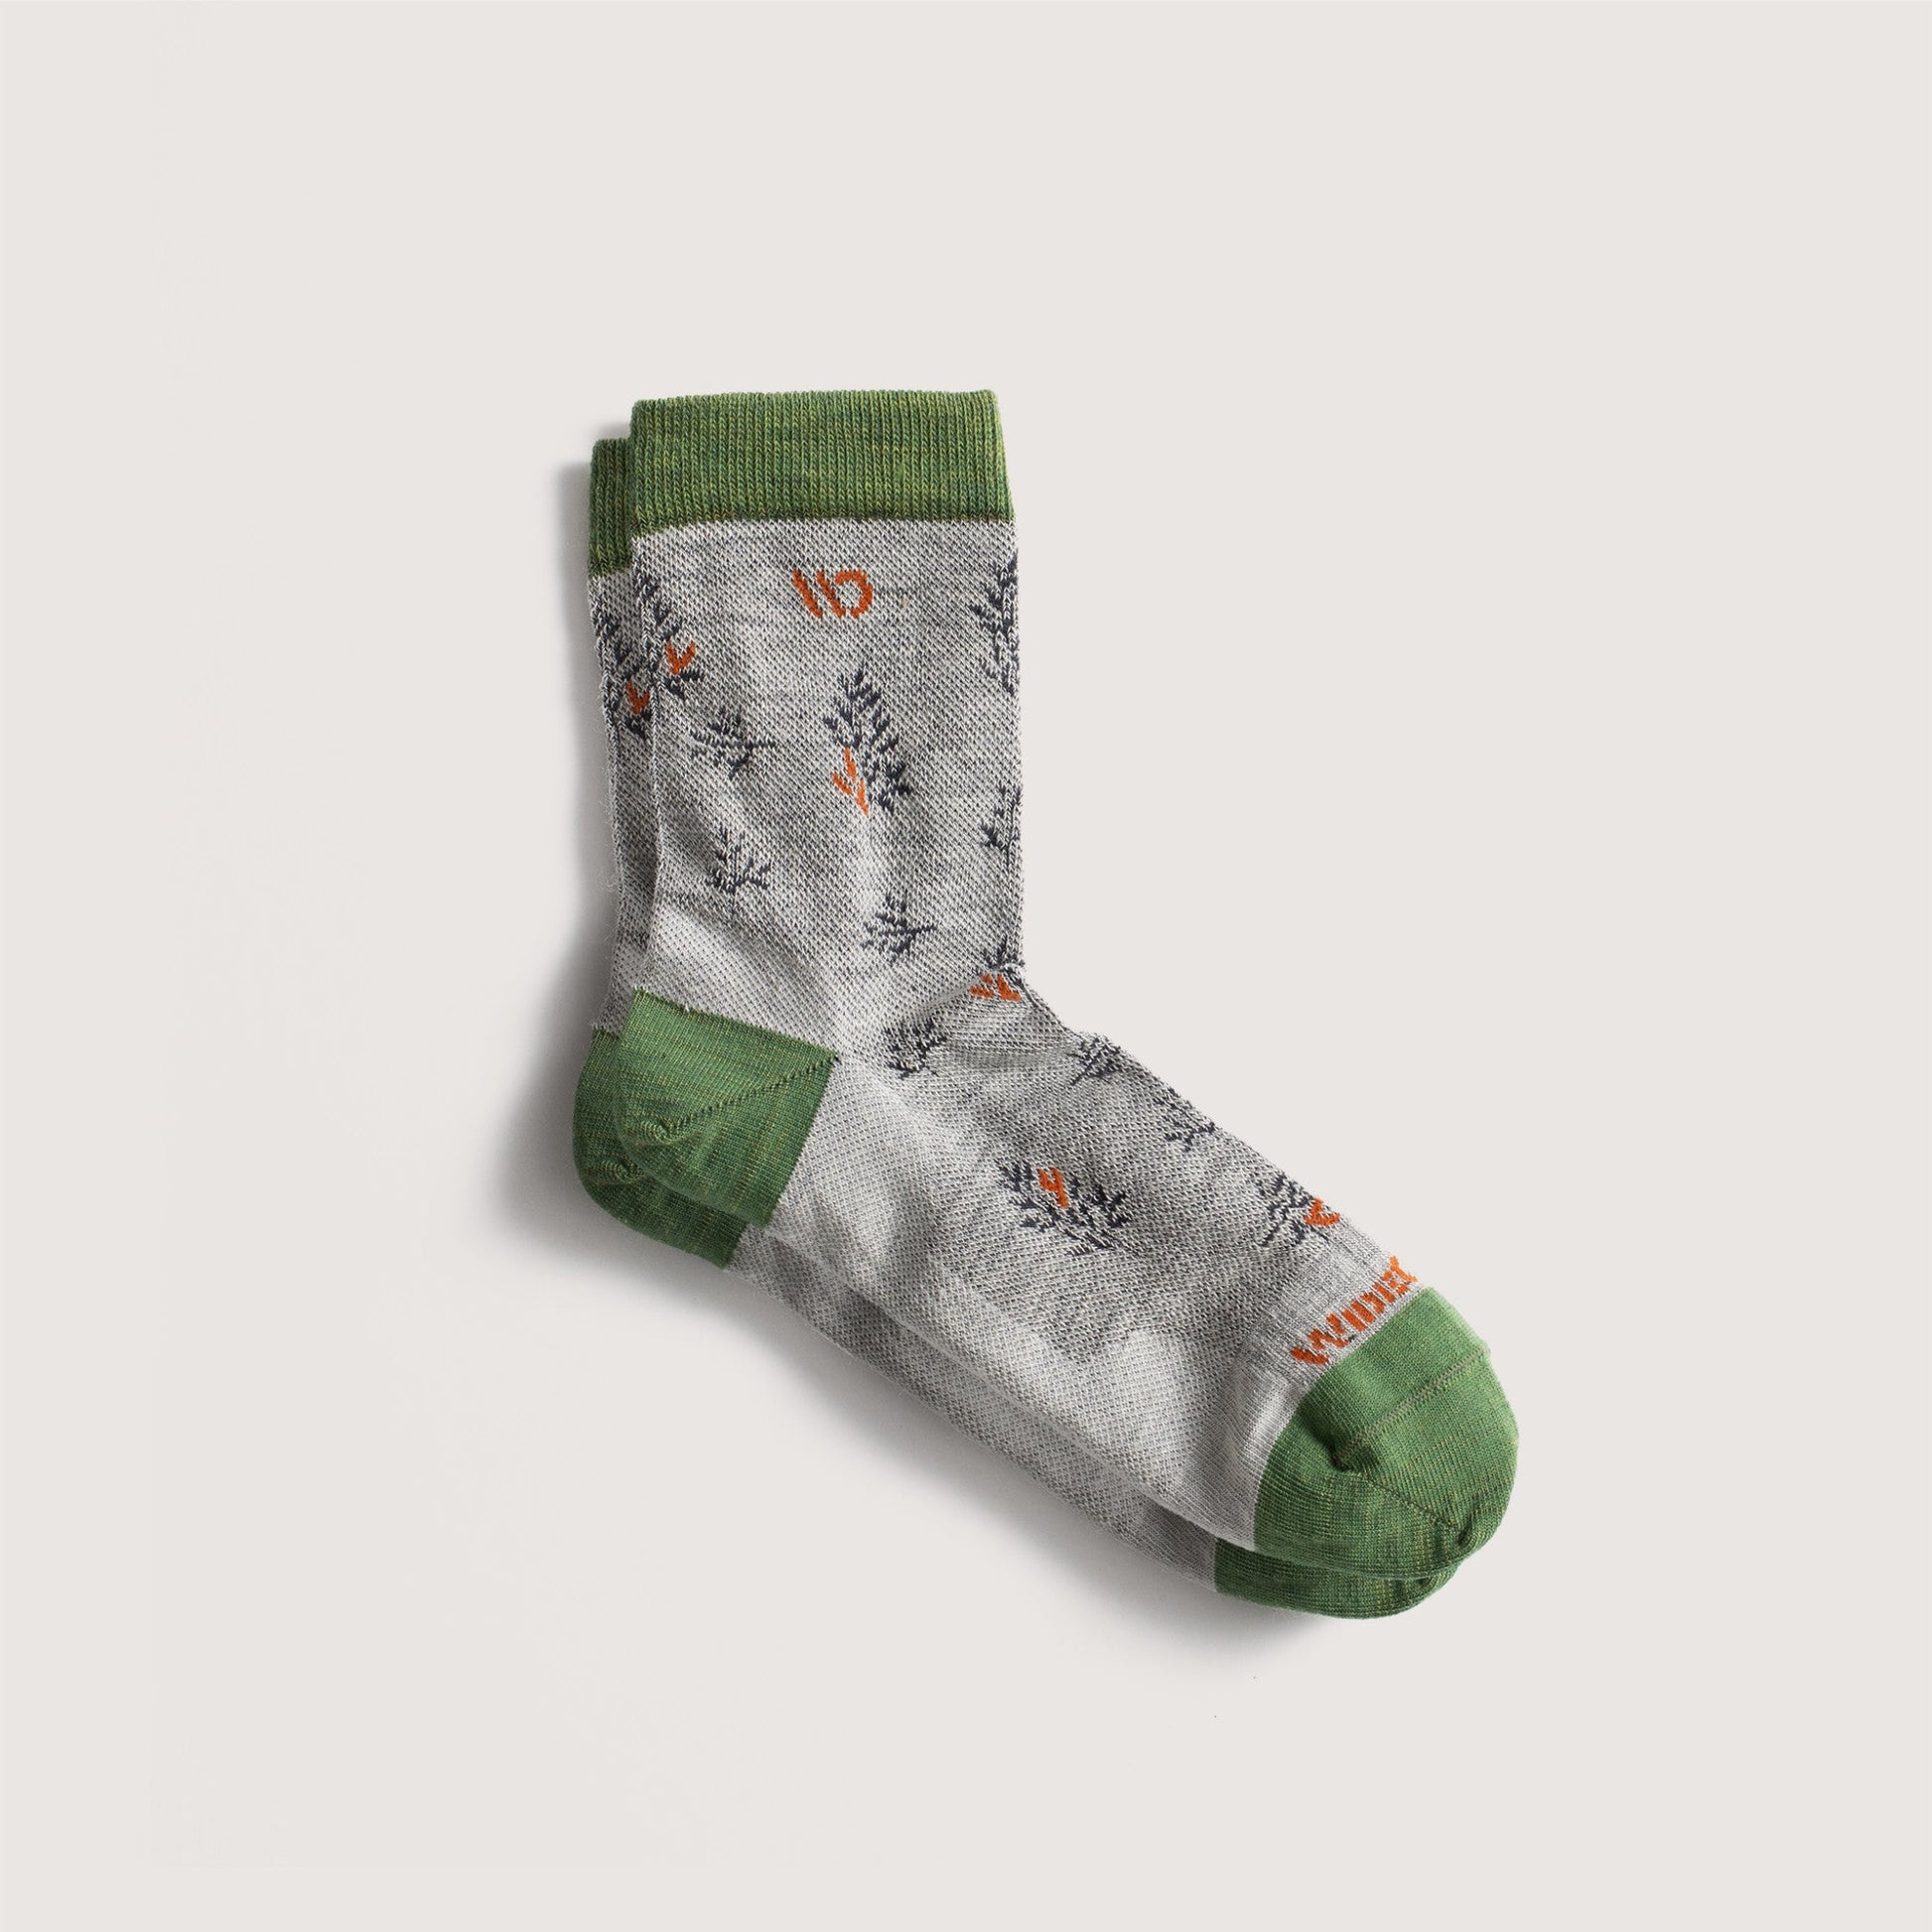 Flat socks featuring green toe, light gray body, orange logo and navy detail --Light Gray/Teal/Denim/Taupe